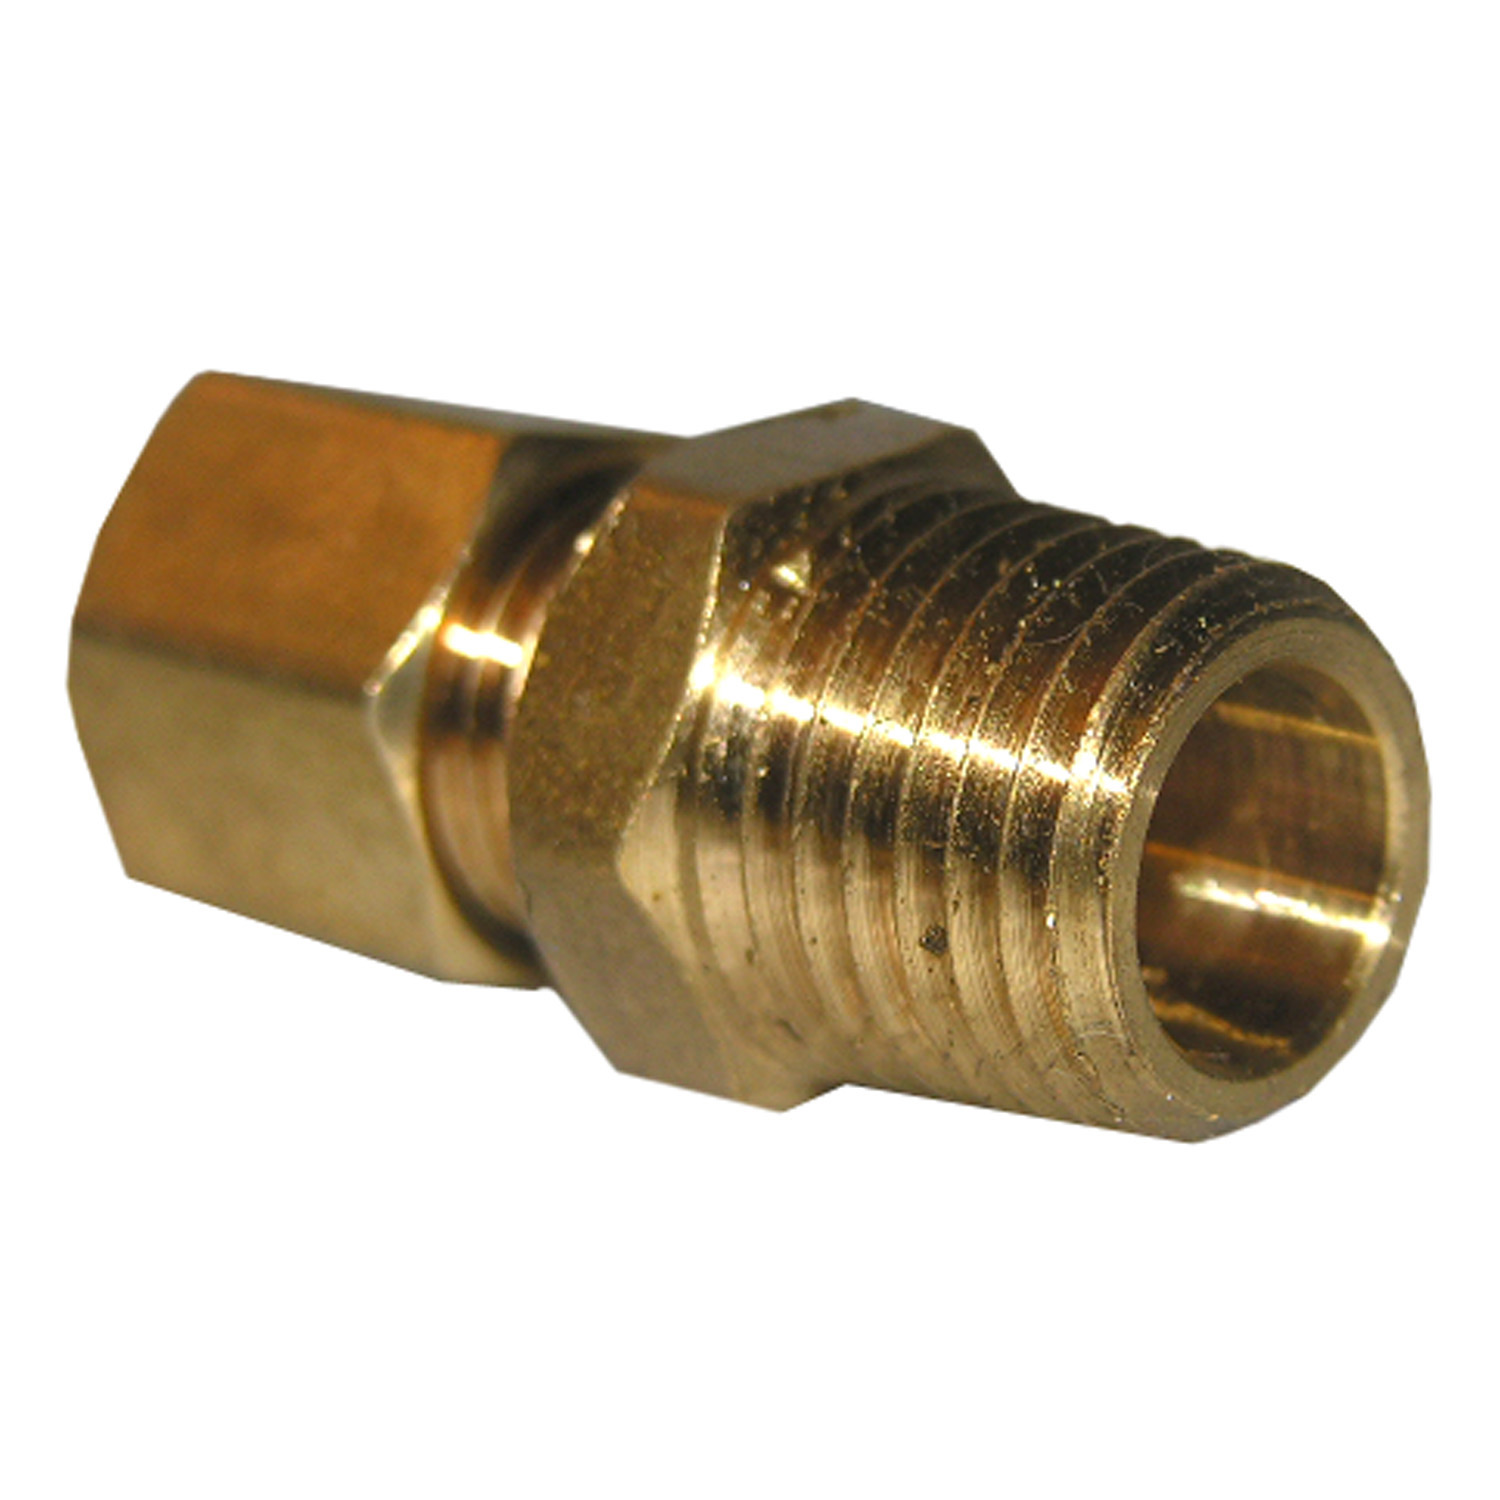 17-6811 Pipe Adapter, 1/4 x 1/8 in, Compression x MPT, Brass, 150 psi Pressure